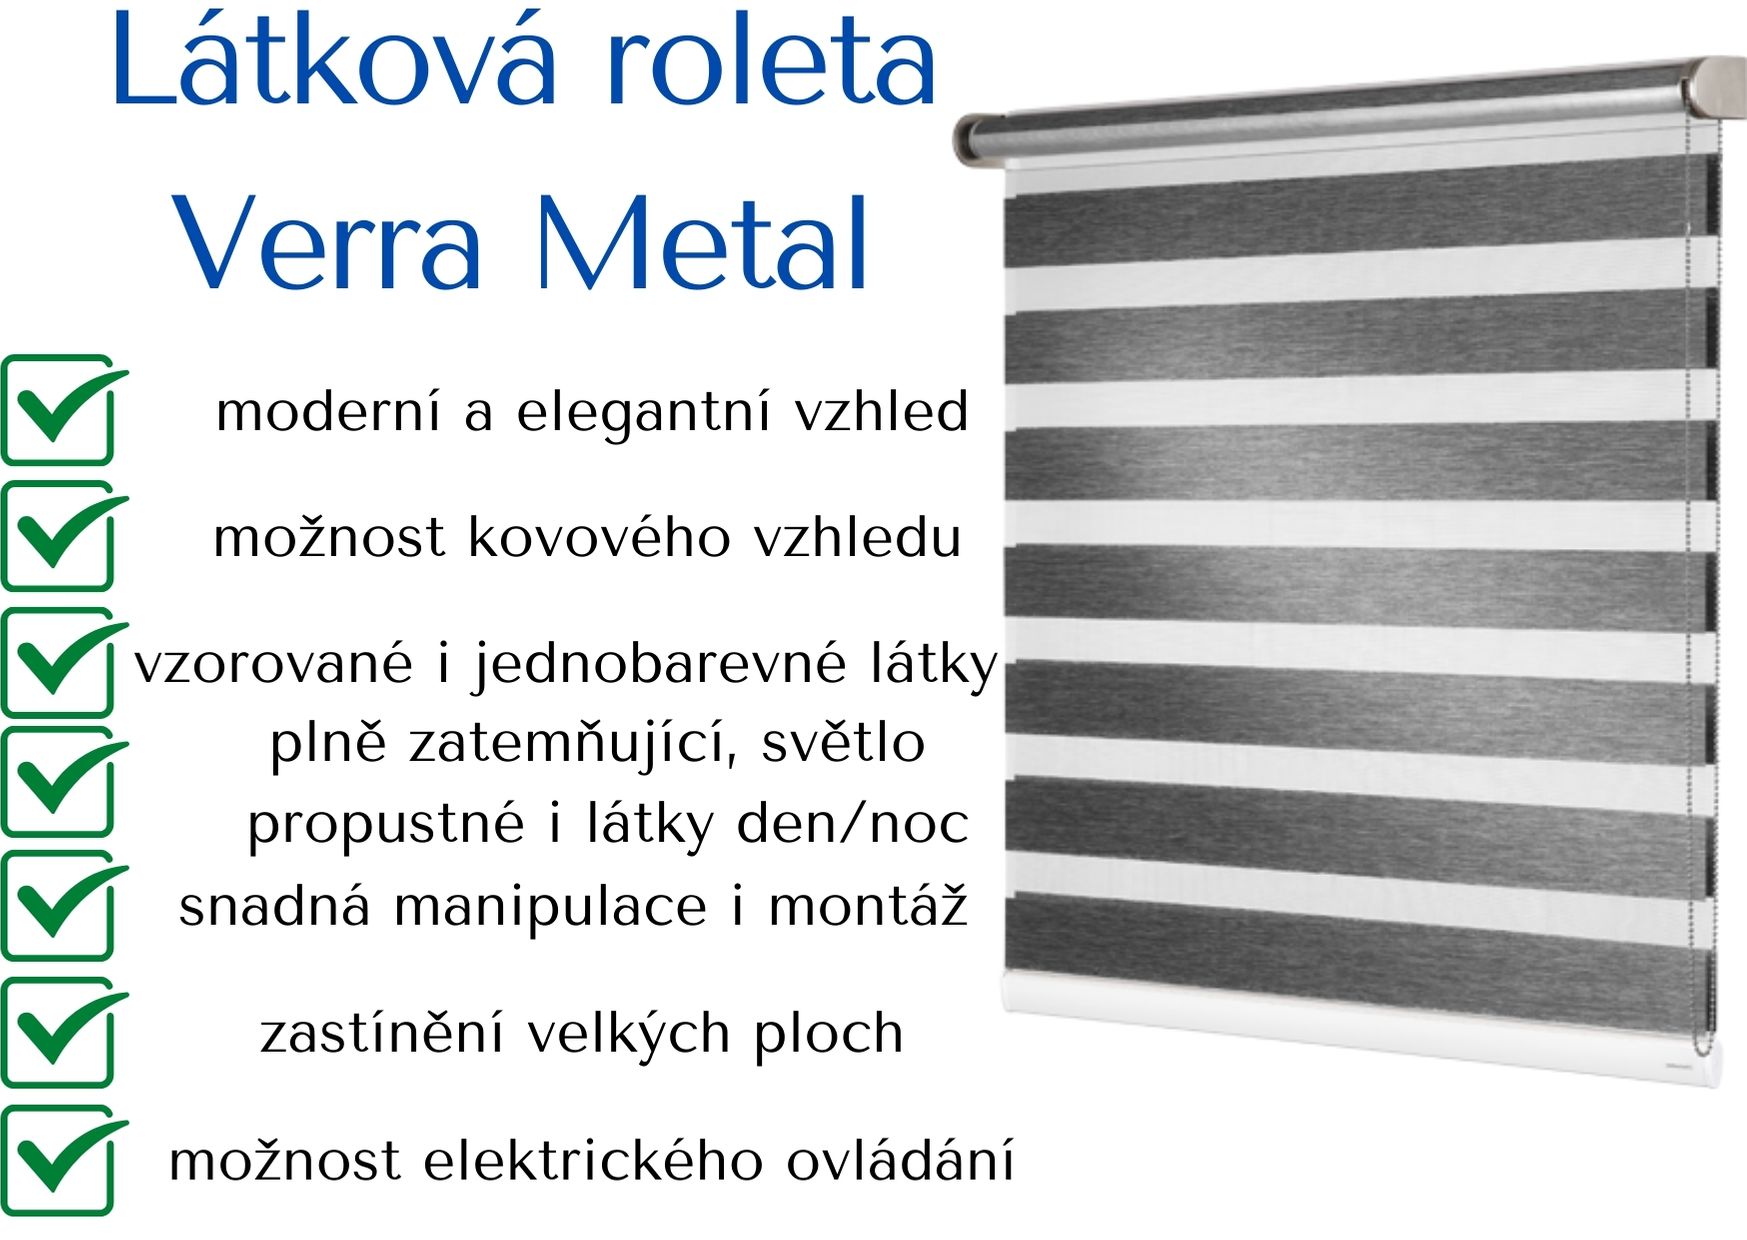 Látková roleta Verra Metal